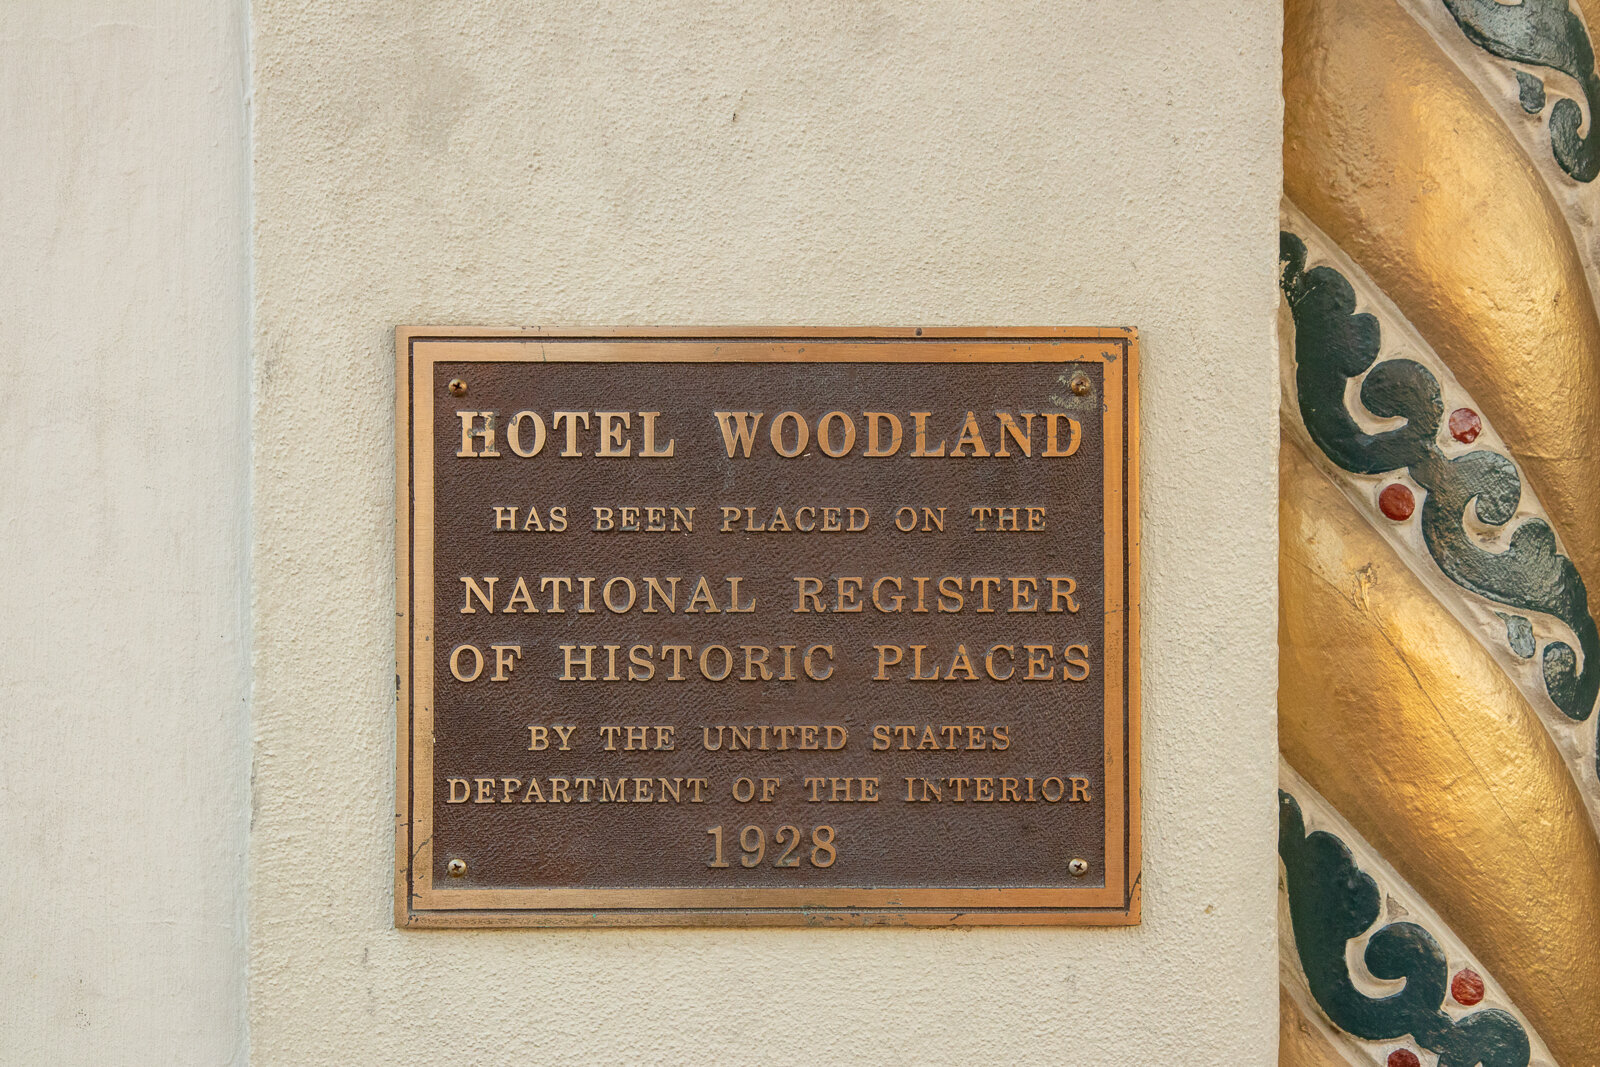 1hotelwoodland-0.jpg